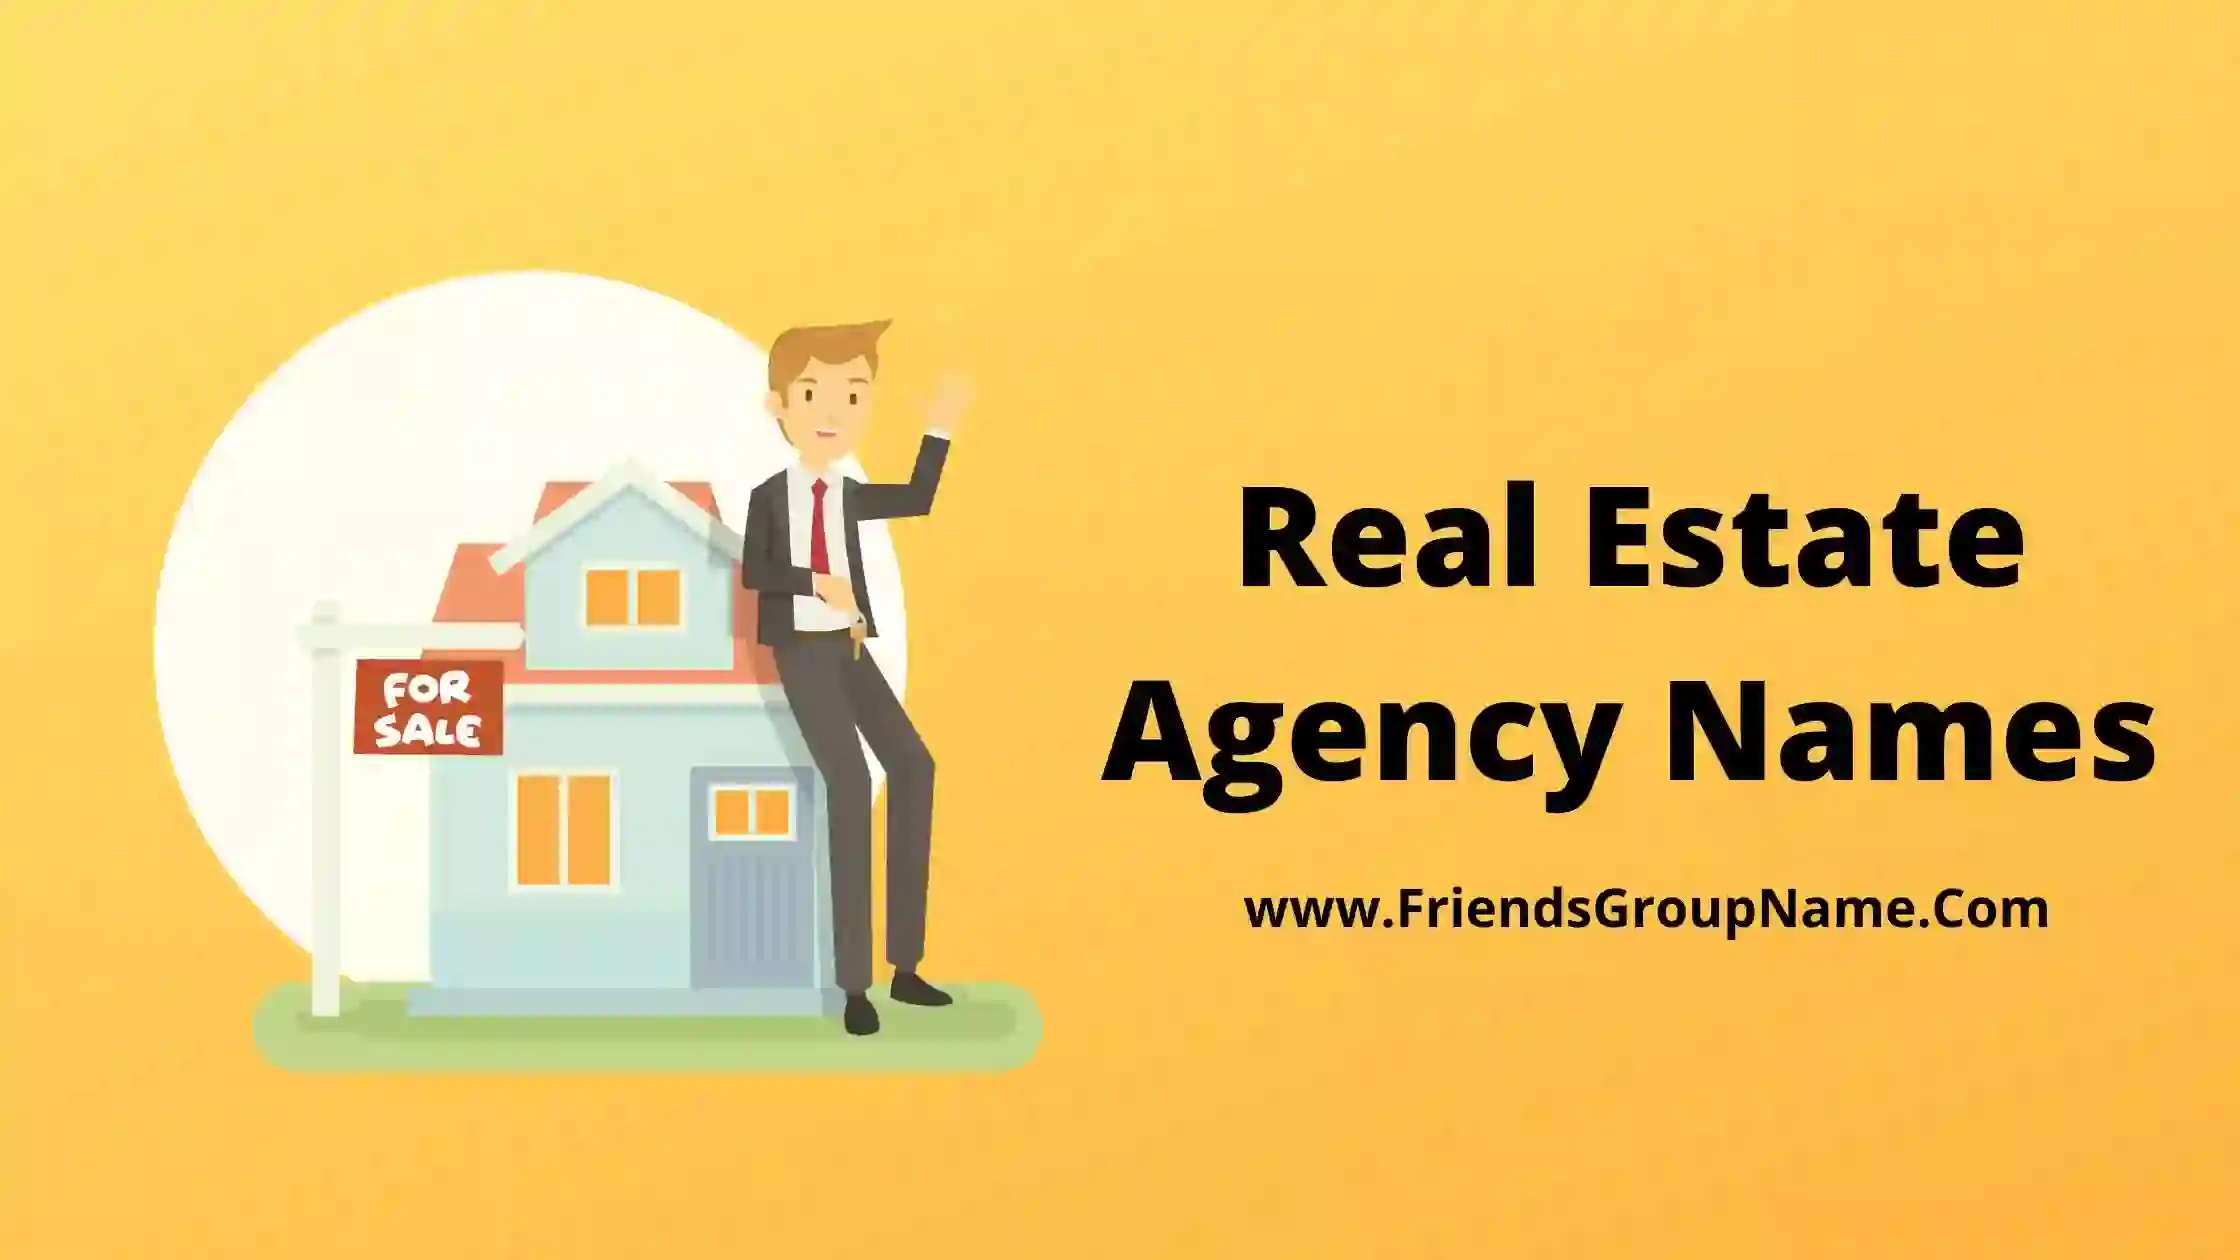 Real Estate Agency Names